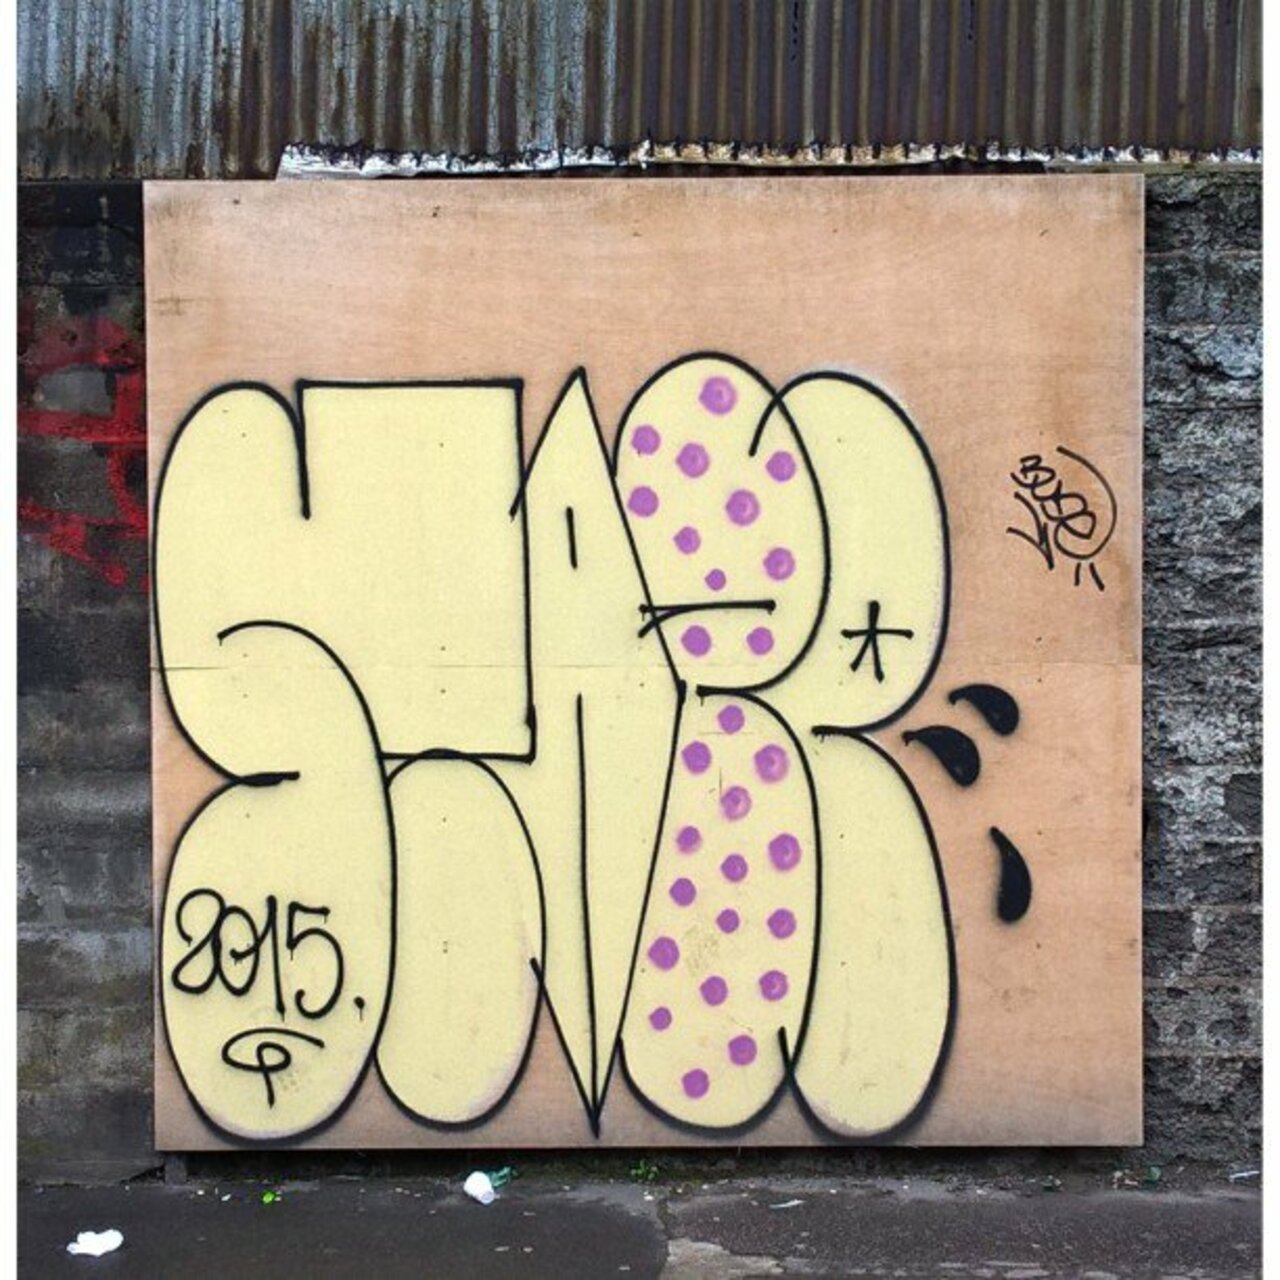 #Paris #graffiti photo by @maxdimontemarciano http://ift.tt/1WeoZ2h #StreetArt https://t.co/xp91xFhO4y